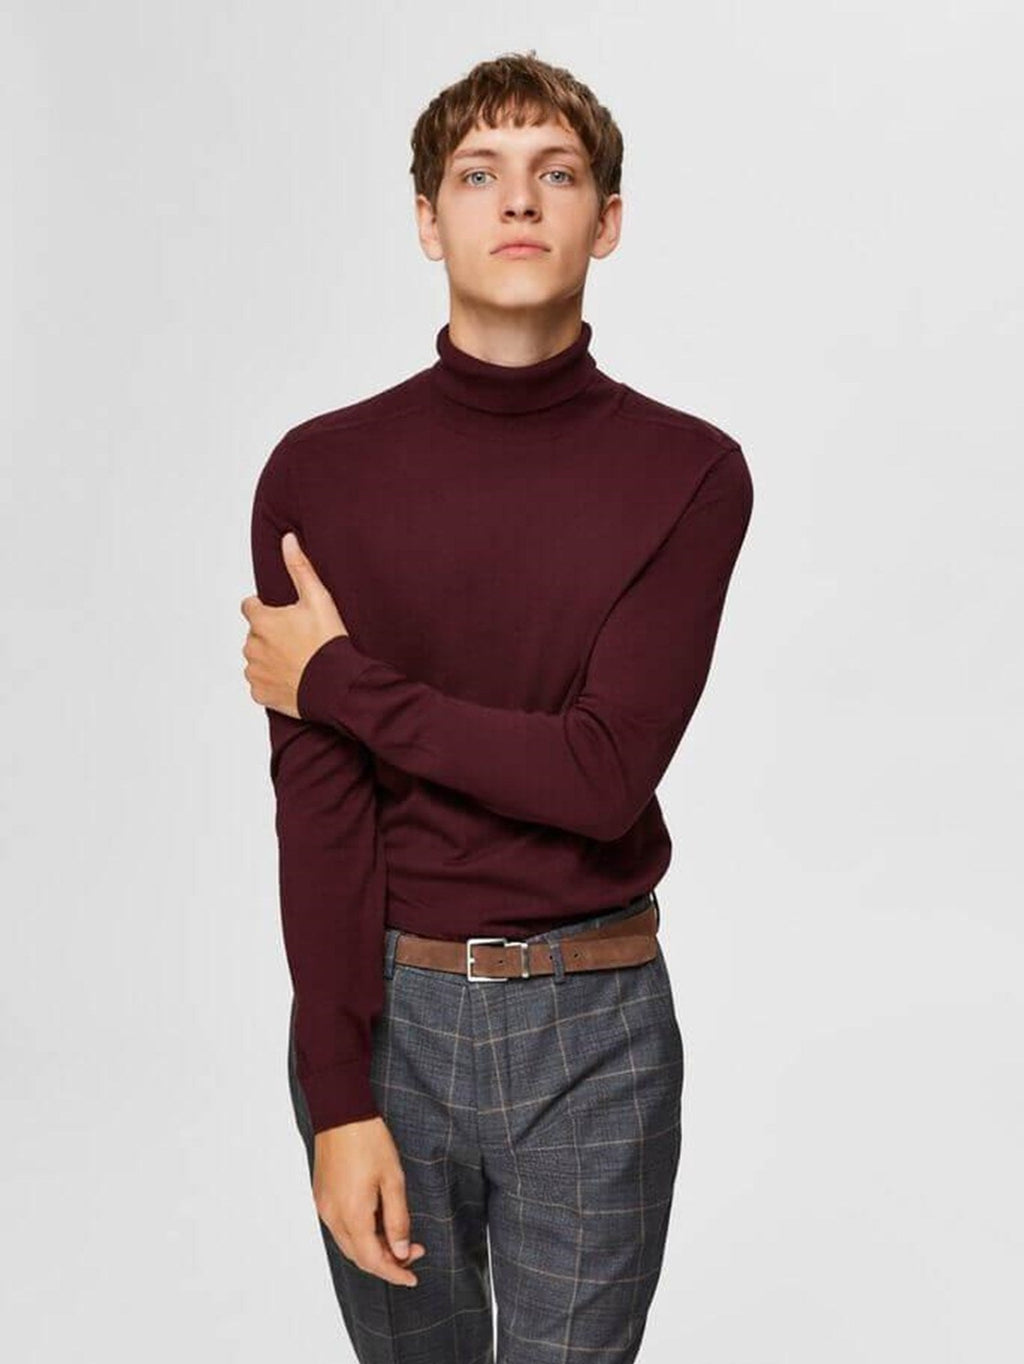 PIMA Cotton Turtleneck Sweater - Borgogna rosso